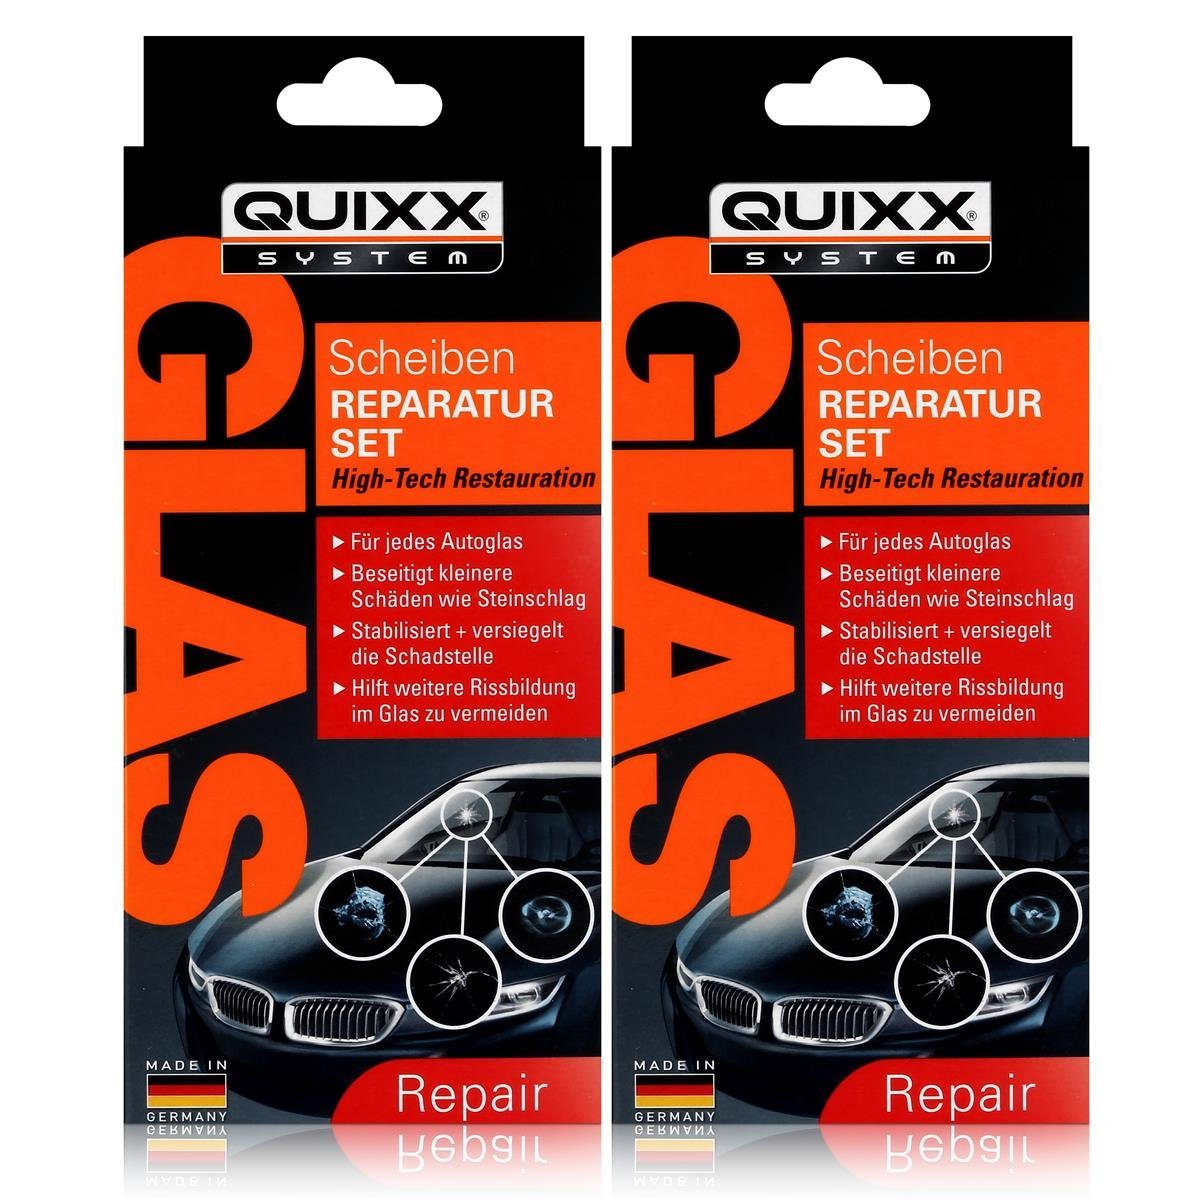 QUIXX Reparatur-Set Quixx System Scheiben Reparatur Set für jedes Autoglas  (2er Pack)